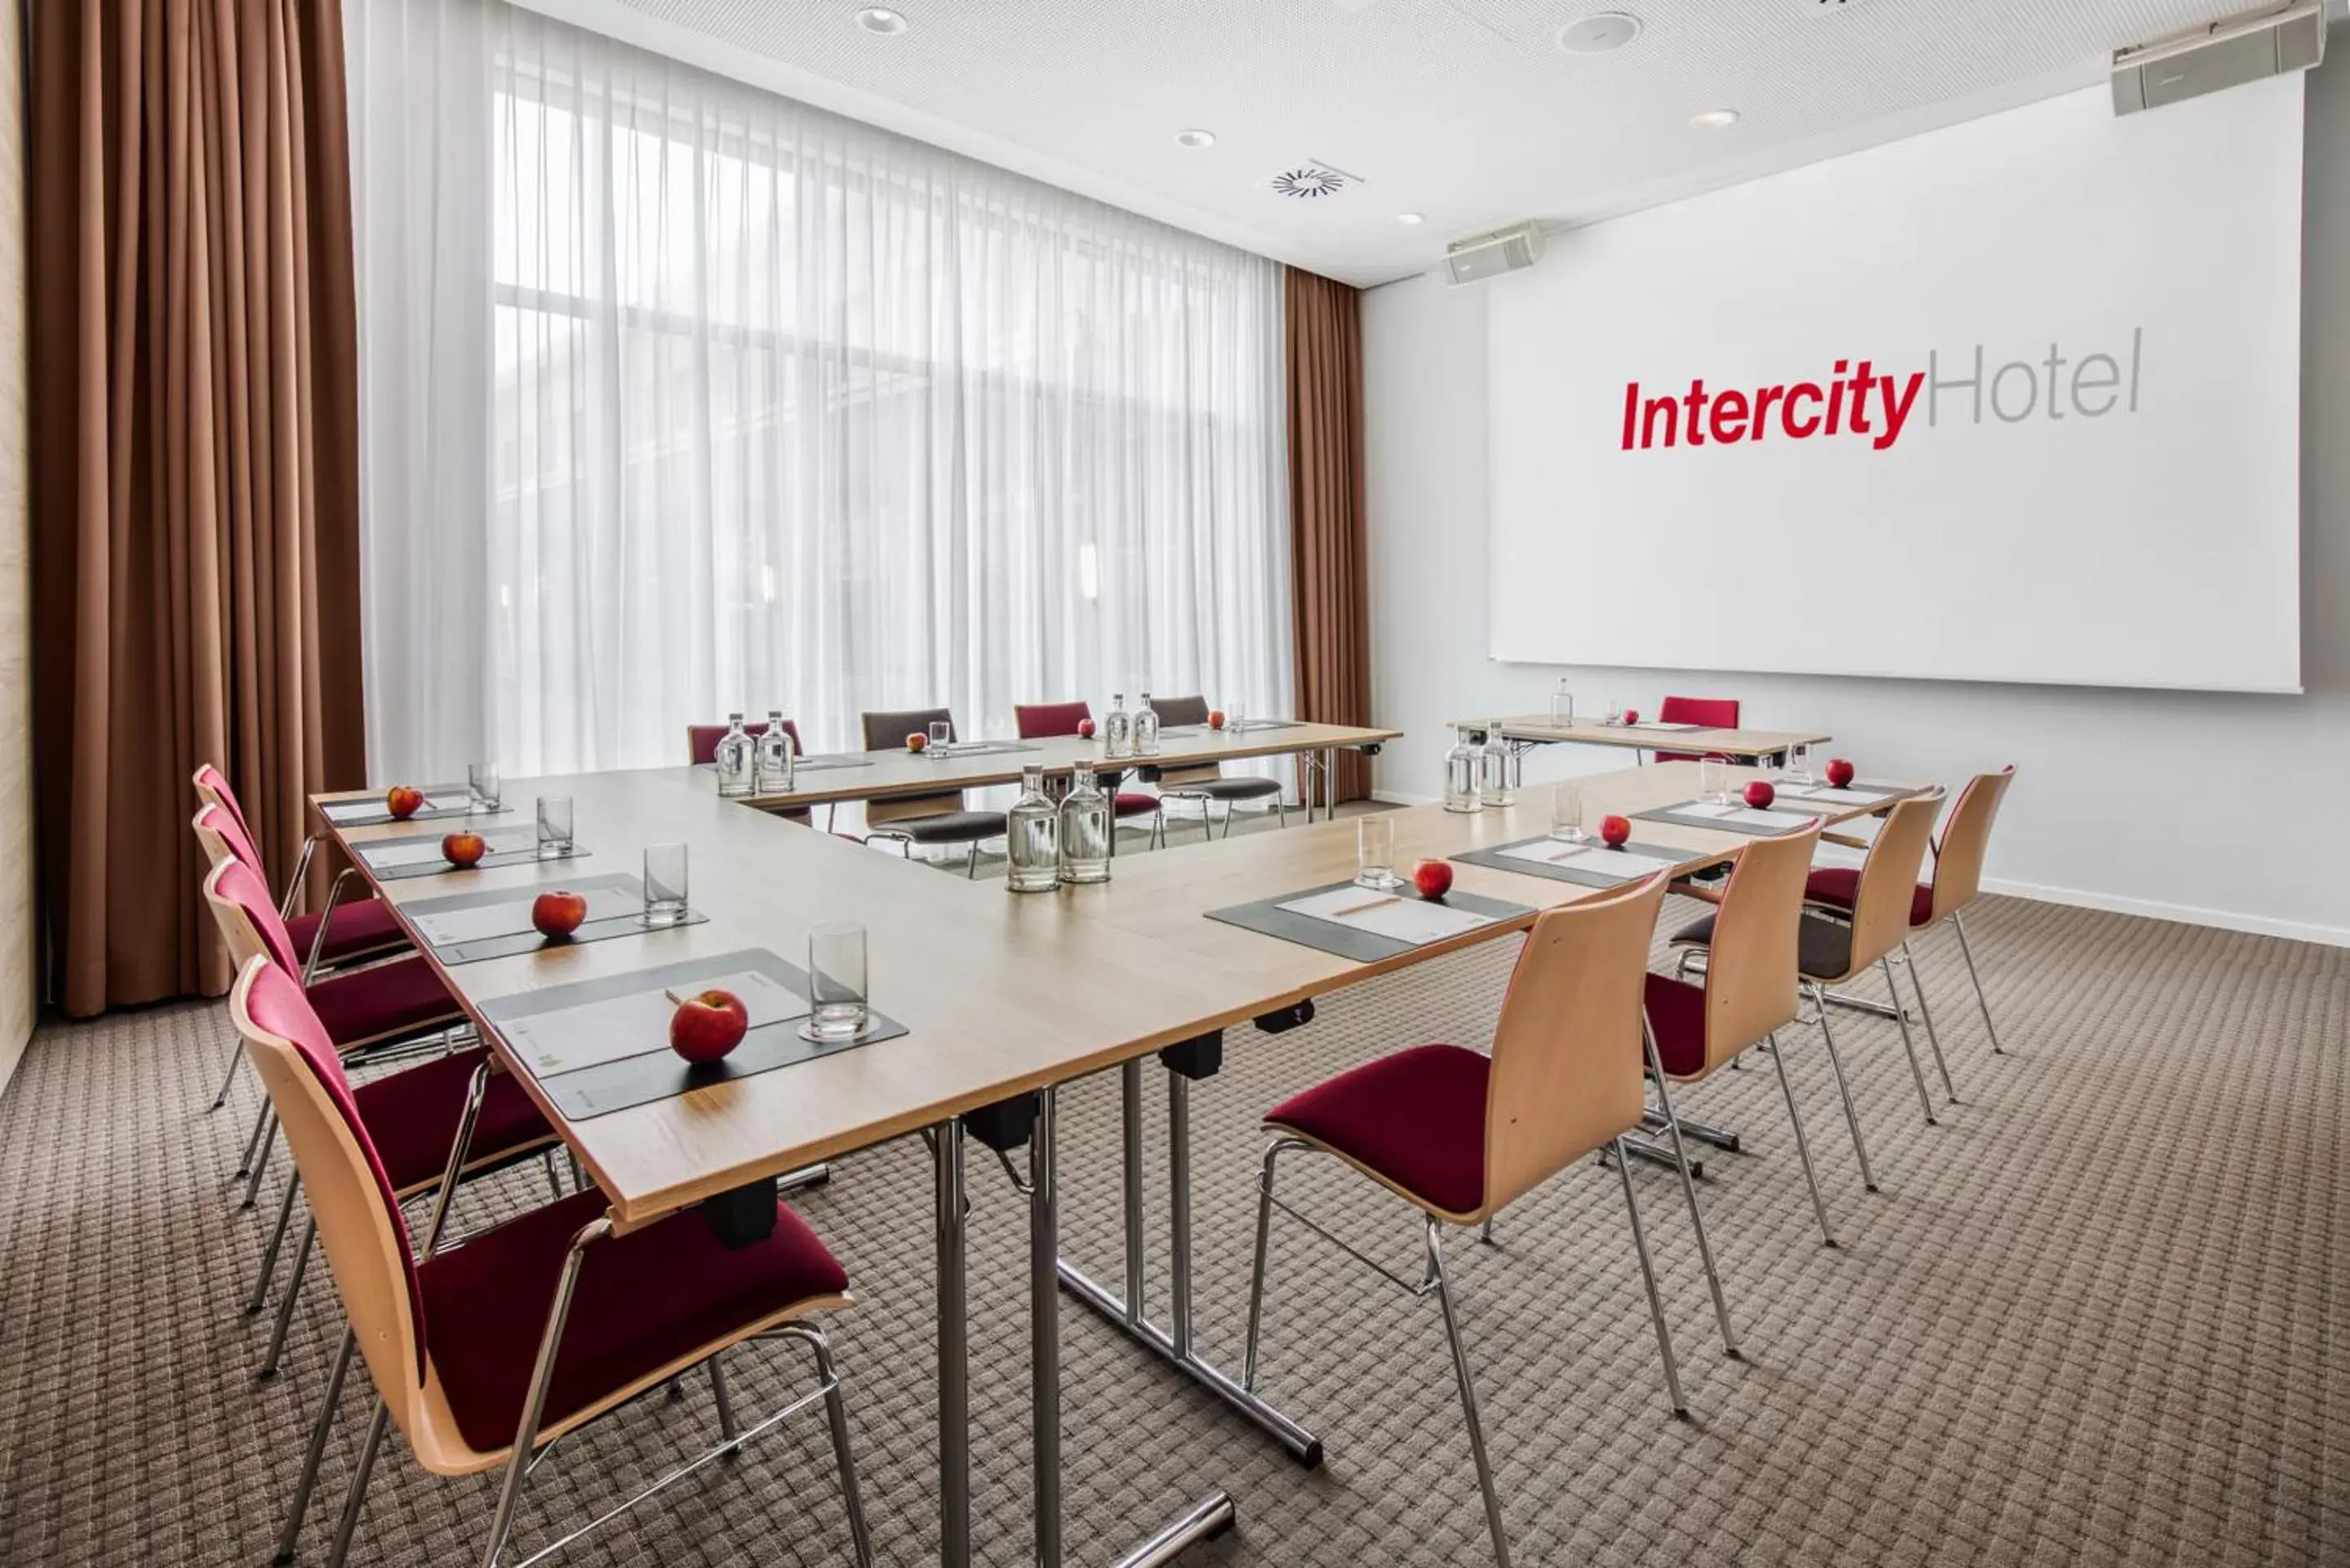 Meeting/conference room in IntercityHotel Dortmund